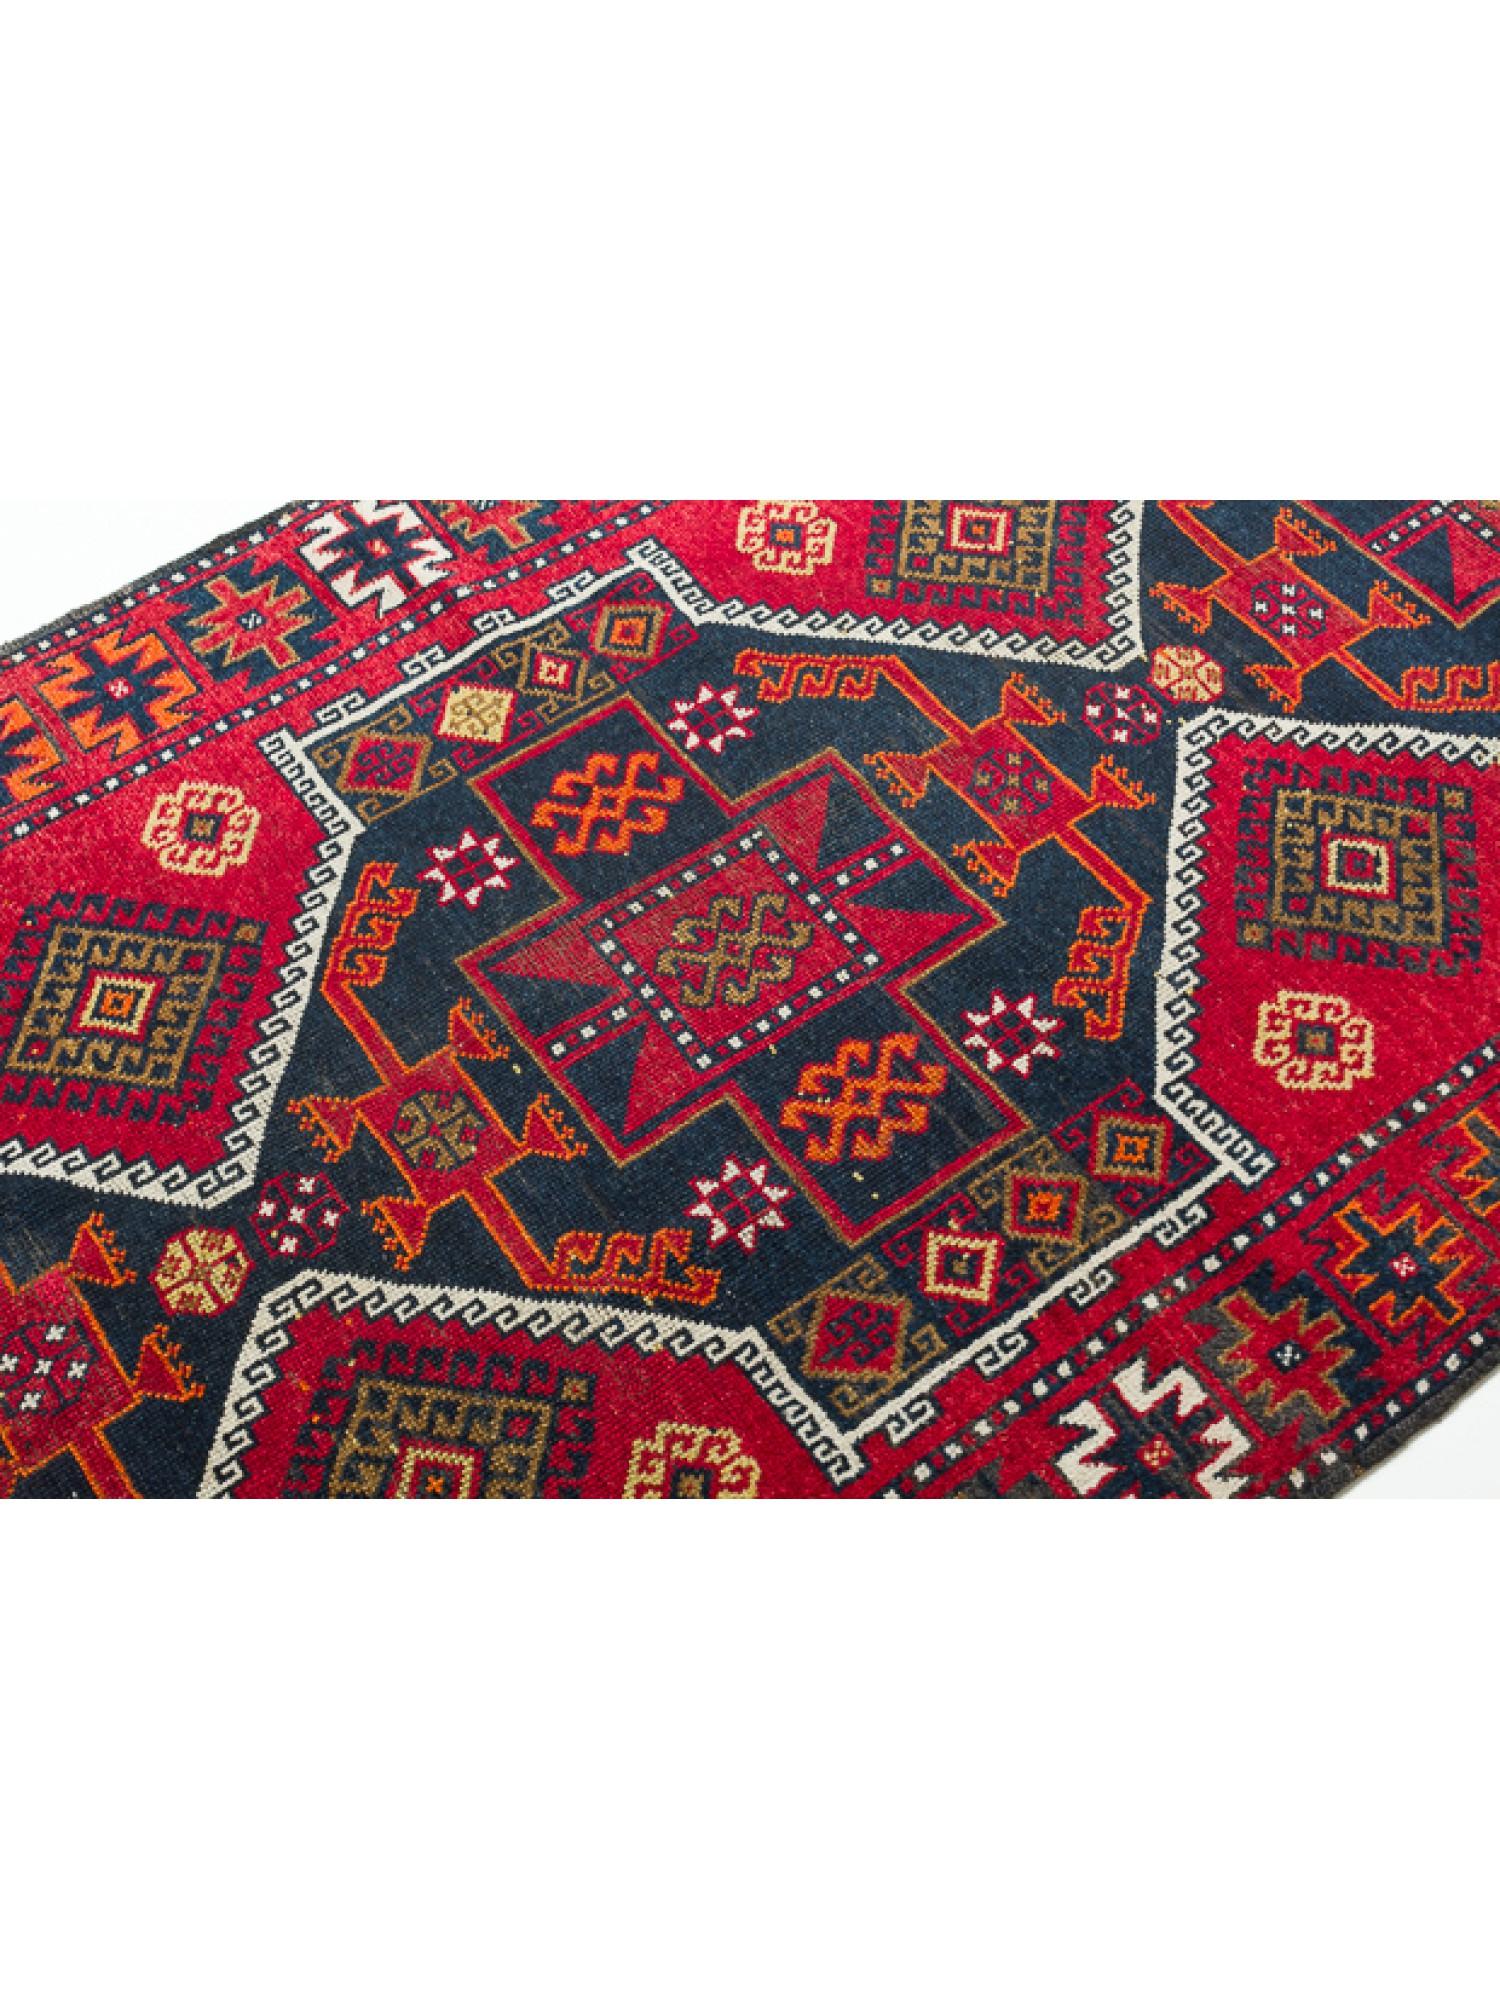 Wool Antique Kurdish Runner Rug - Eastern Anatolian Turkish Carpet For Sale